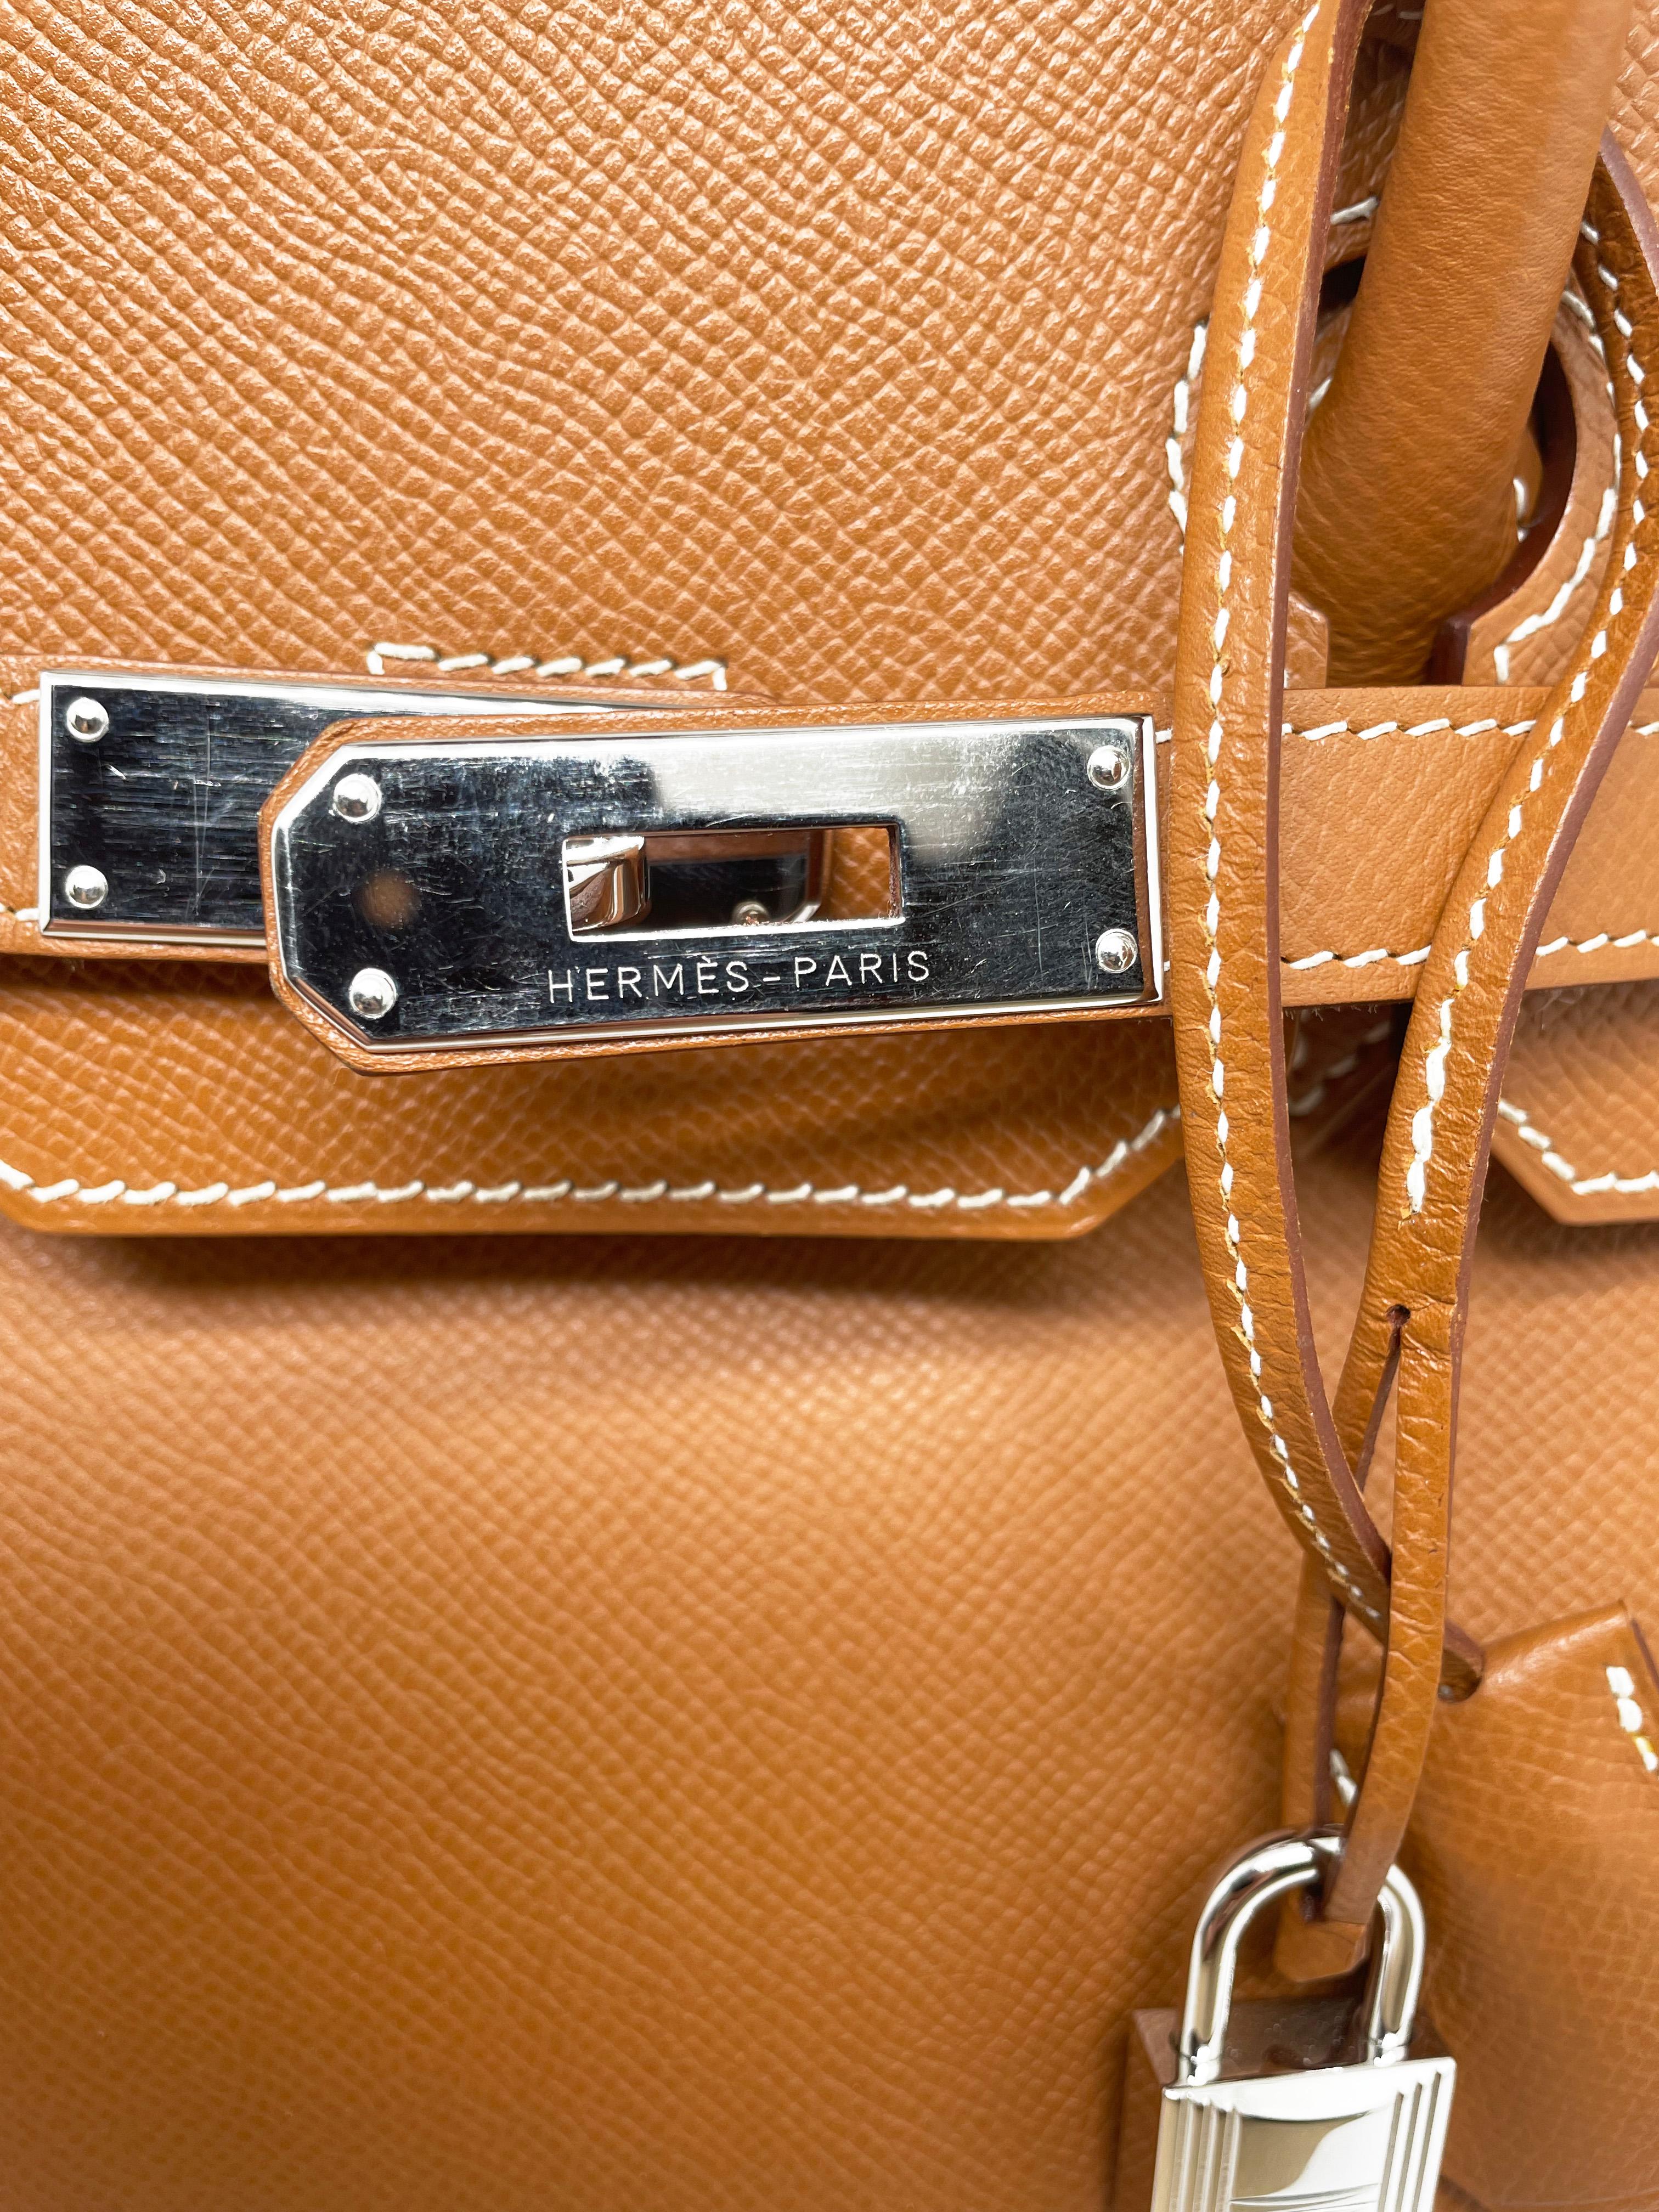 Hermès Birkin 35 Gold handbag in Espom leather and white stitching 8